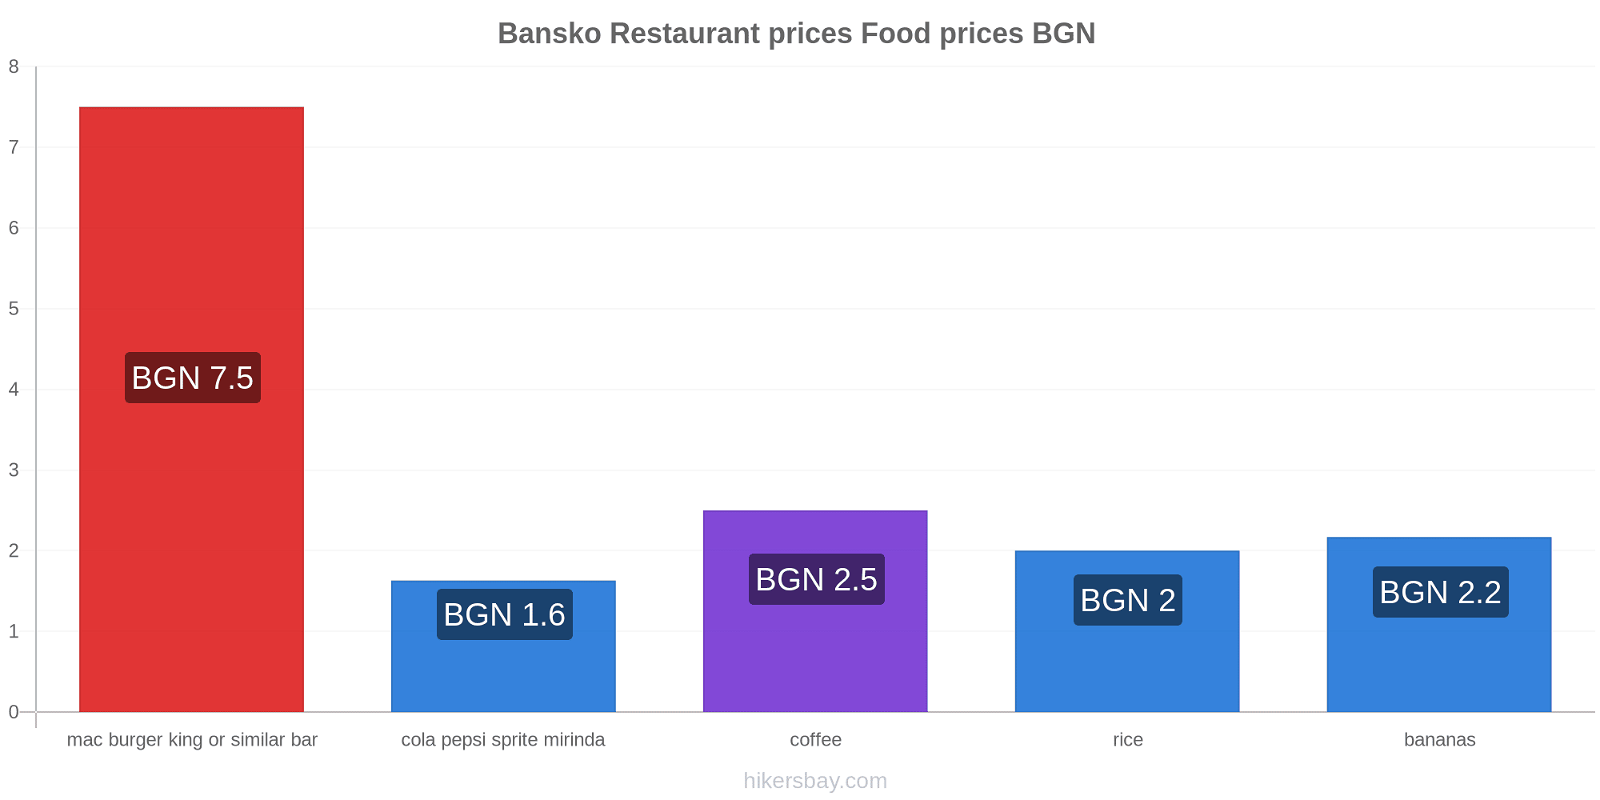 Bansko price changes hikersbay.com